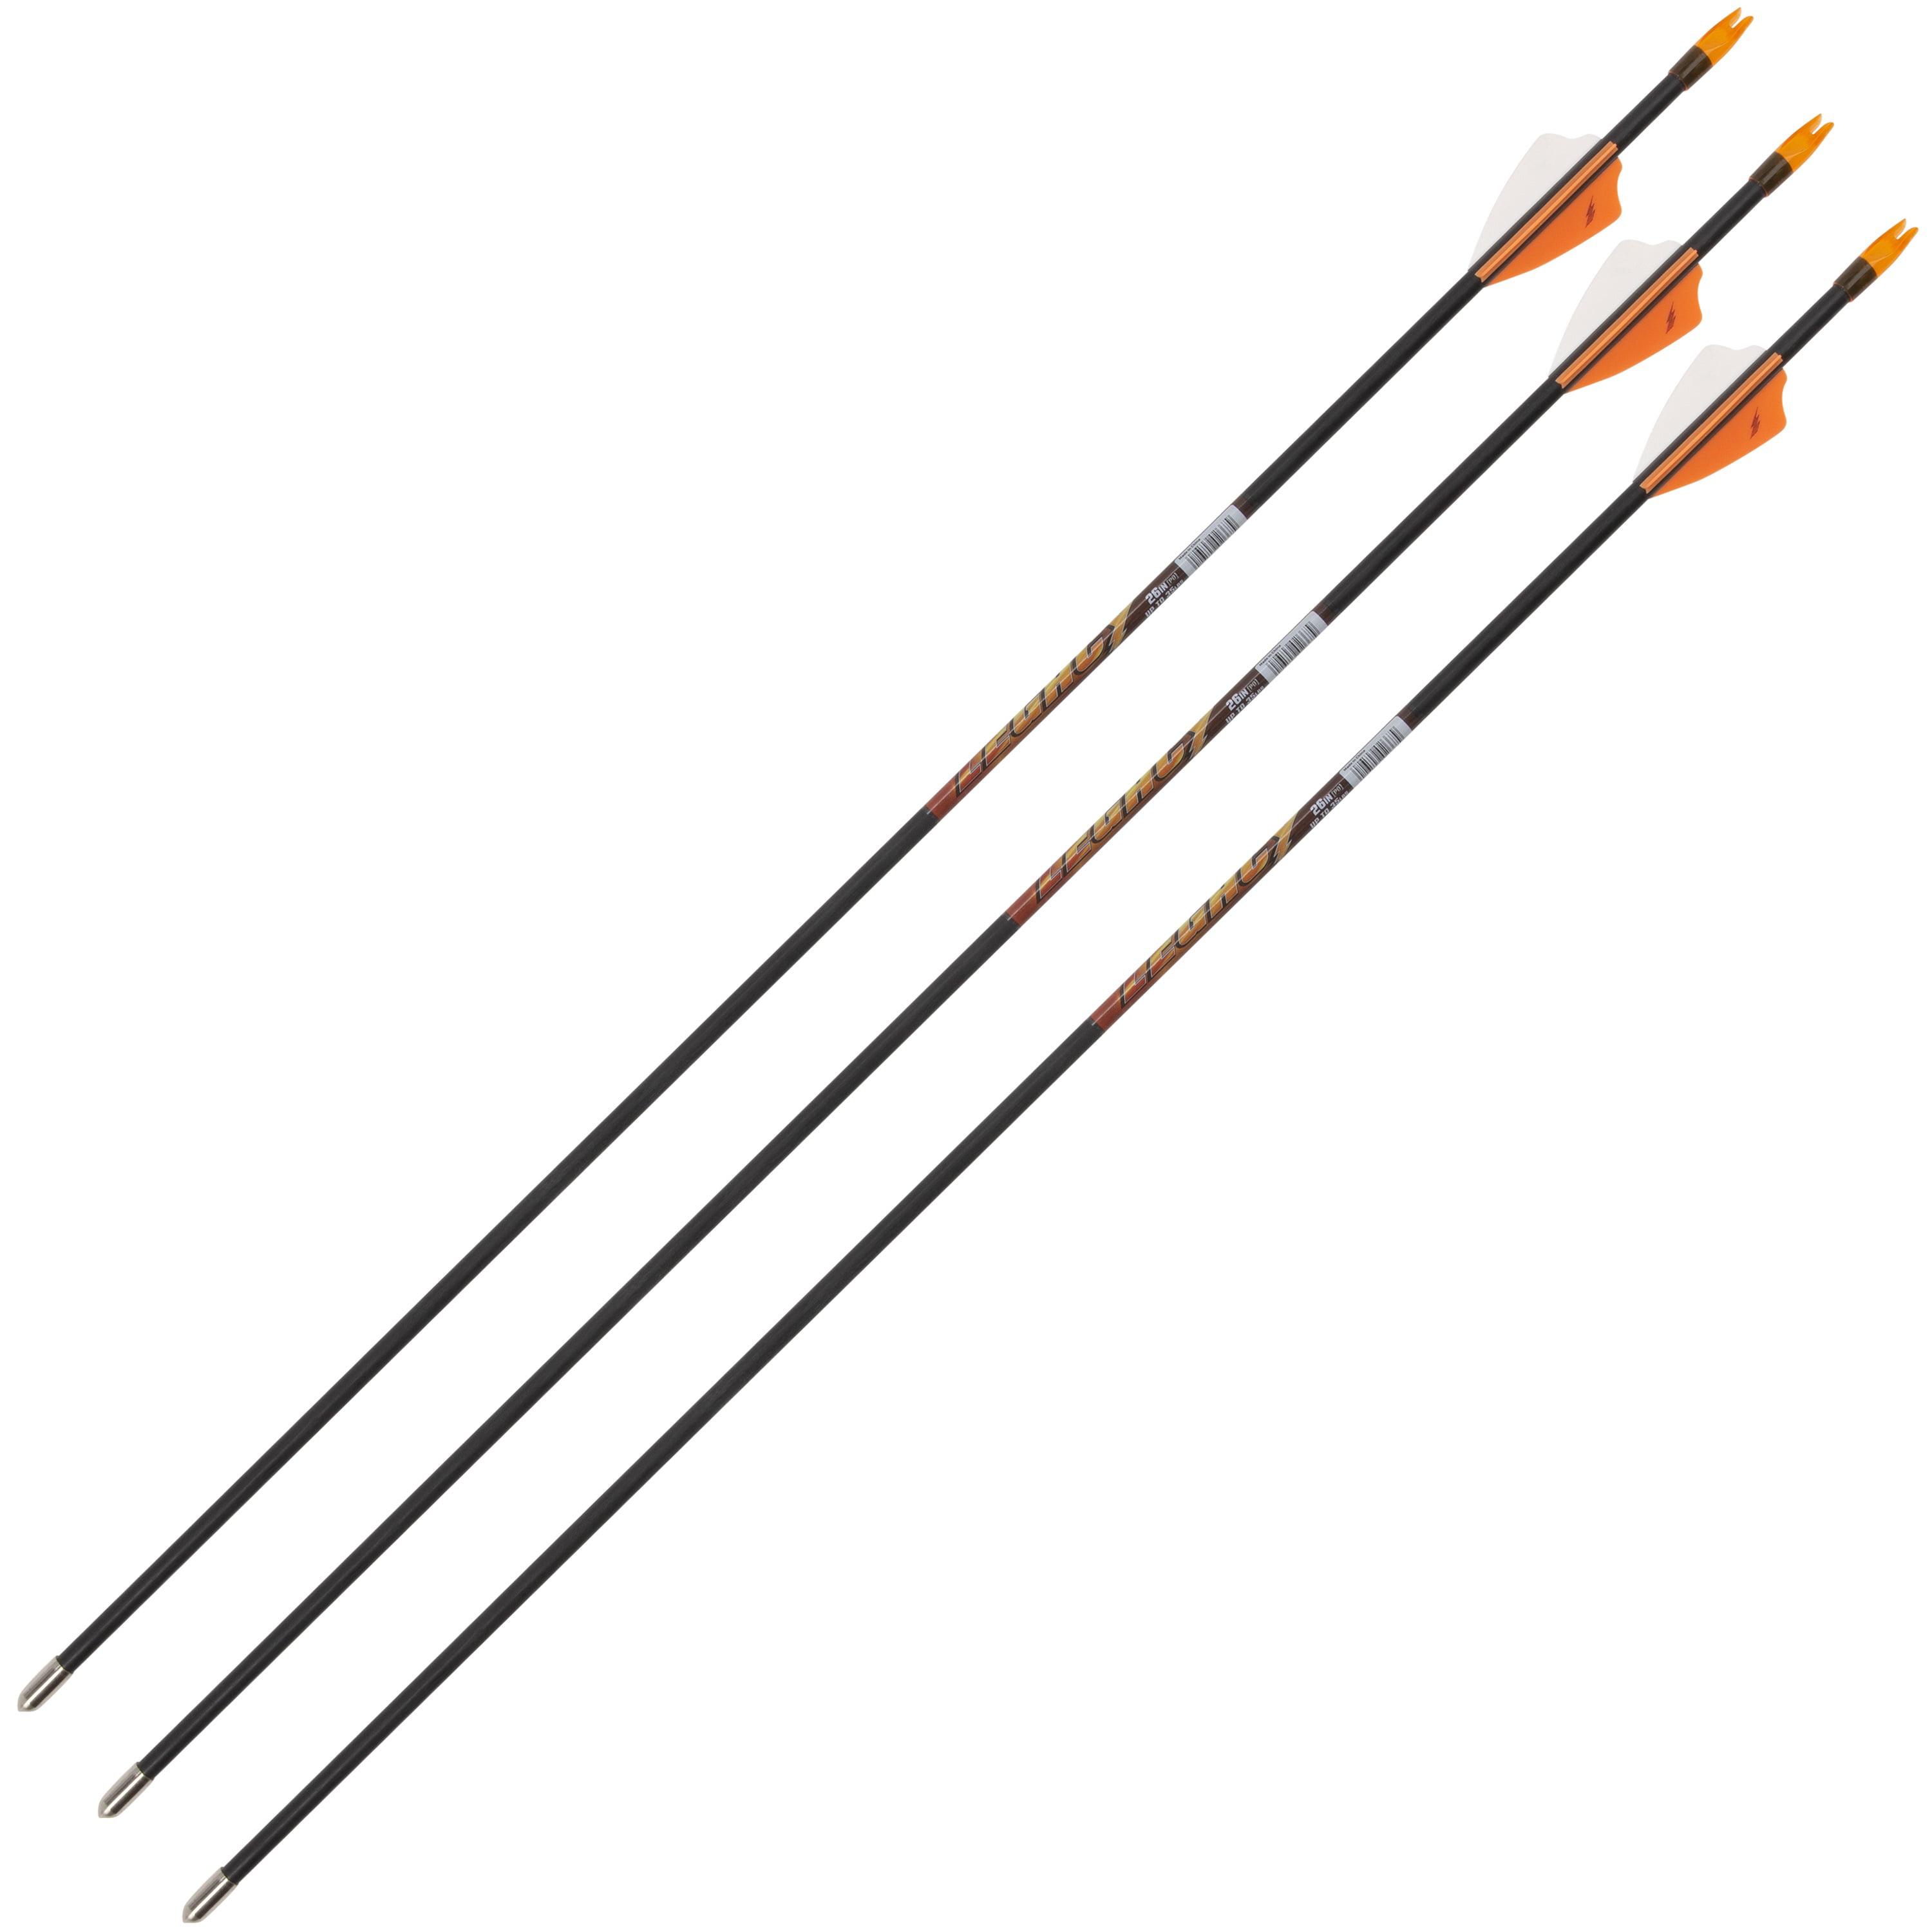 Details about   12PCS 20" Archery Carbon Arrow Shafts OD 8.8mm DIY Handmade Crossbow Bolts Shaft 